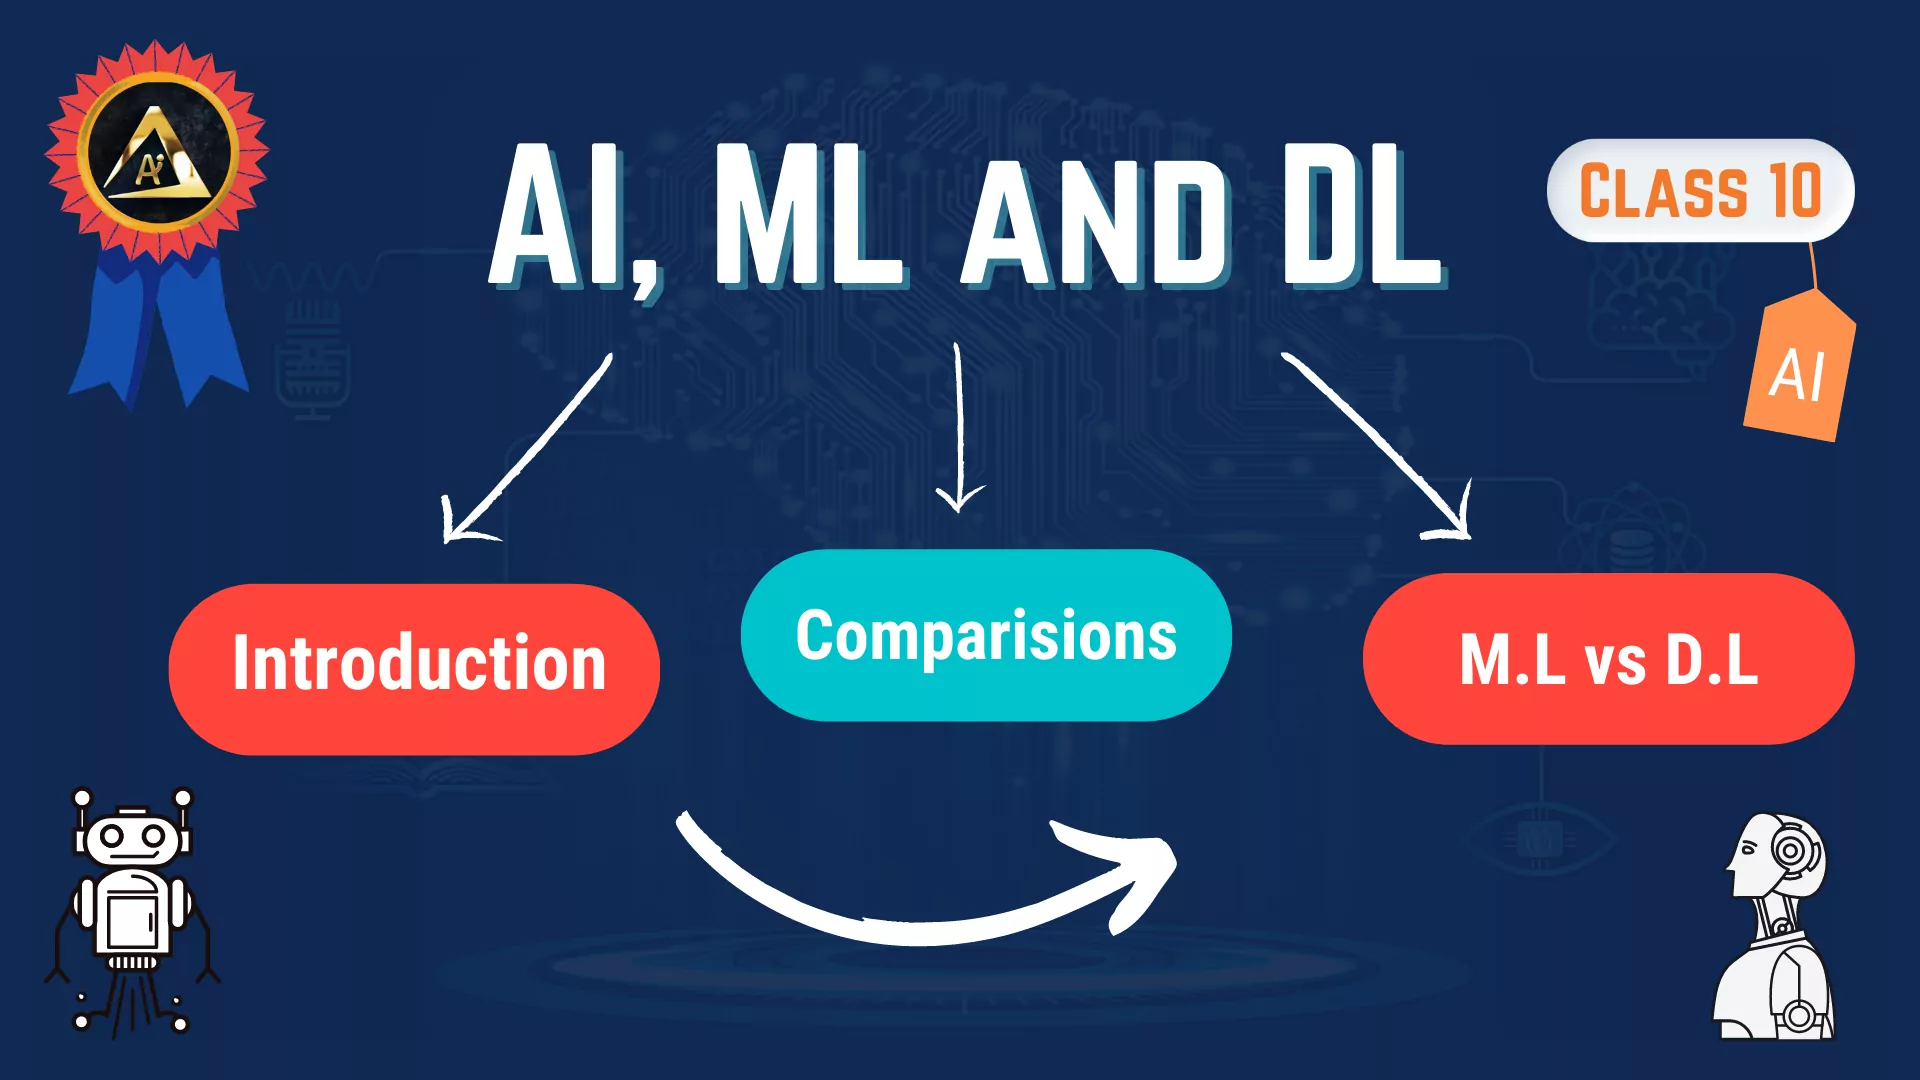 AI, Machine and Deep Learning Class 10